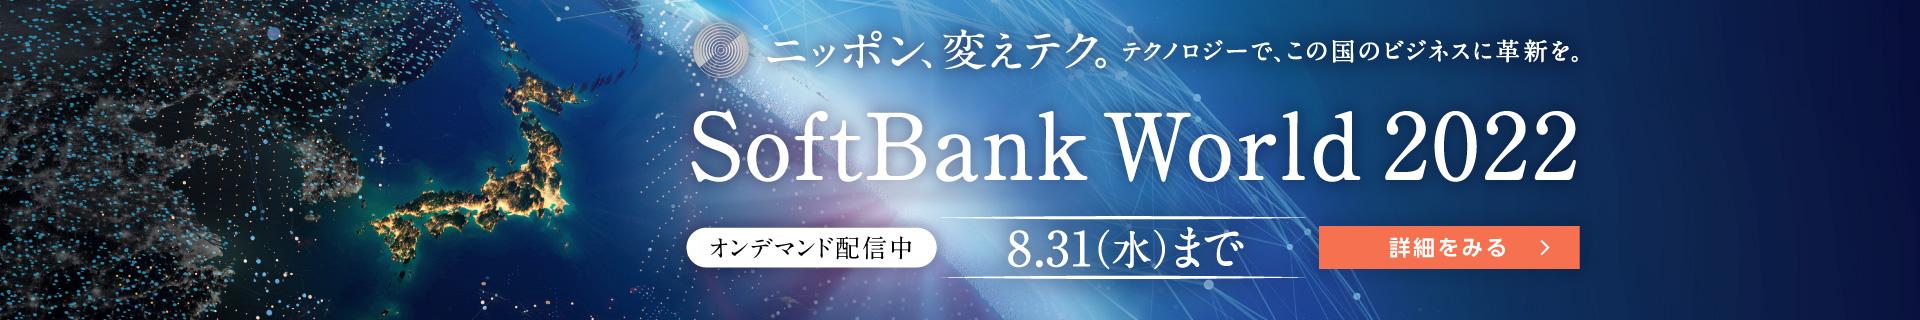 Softbank World 2022